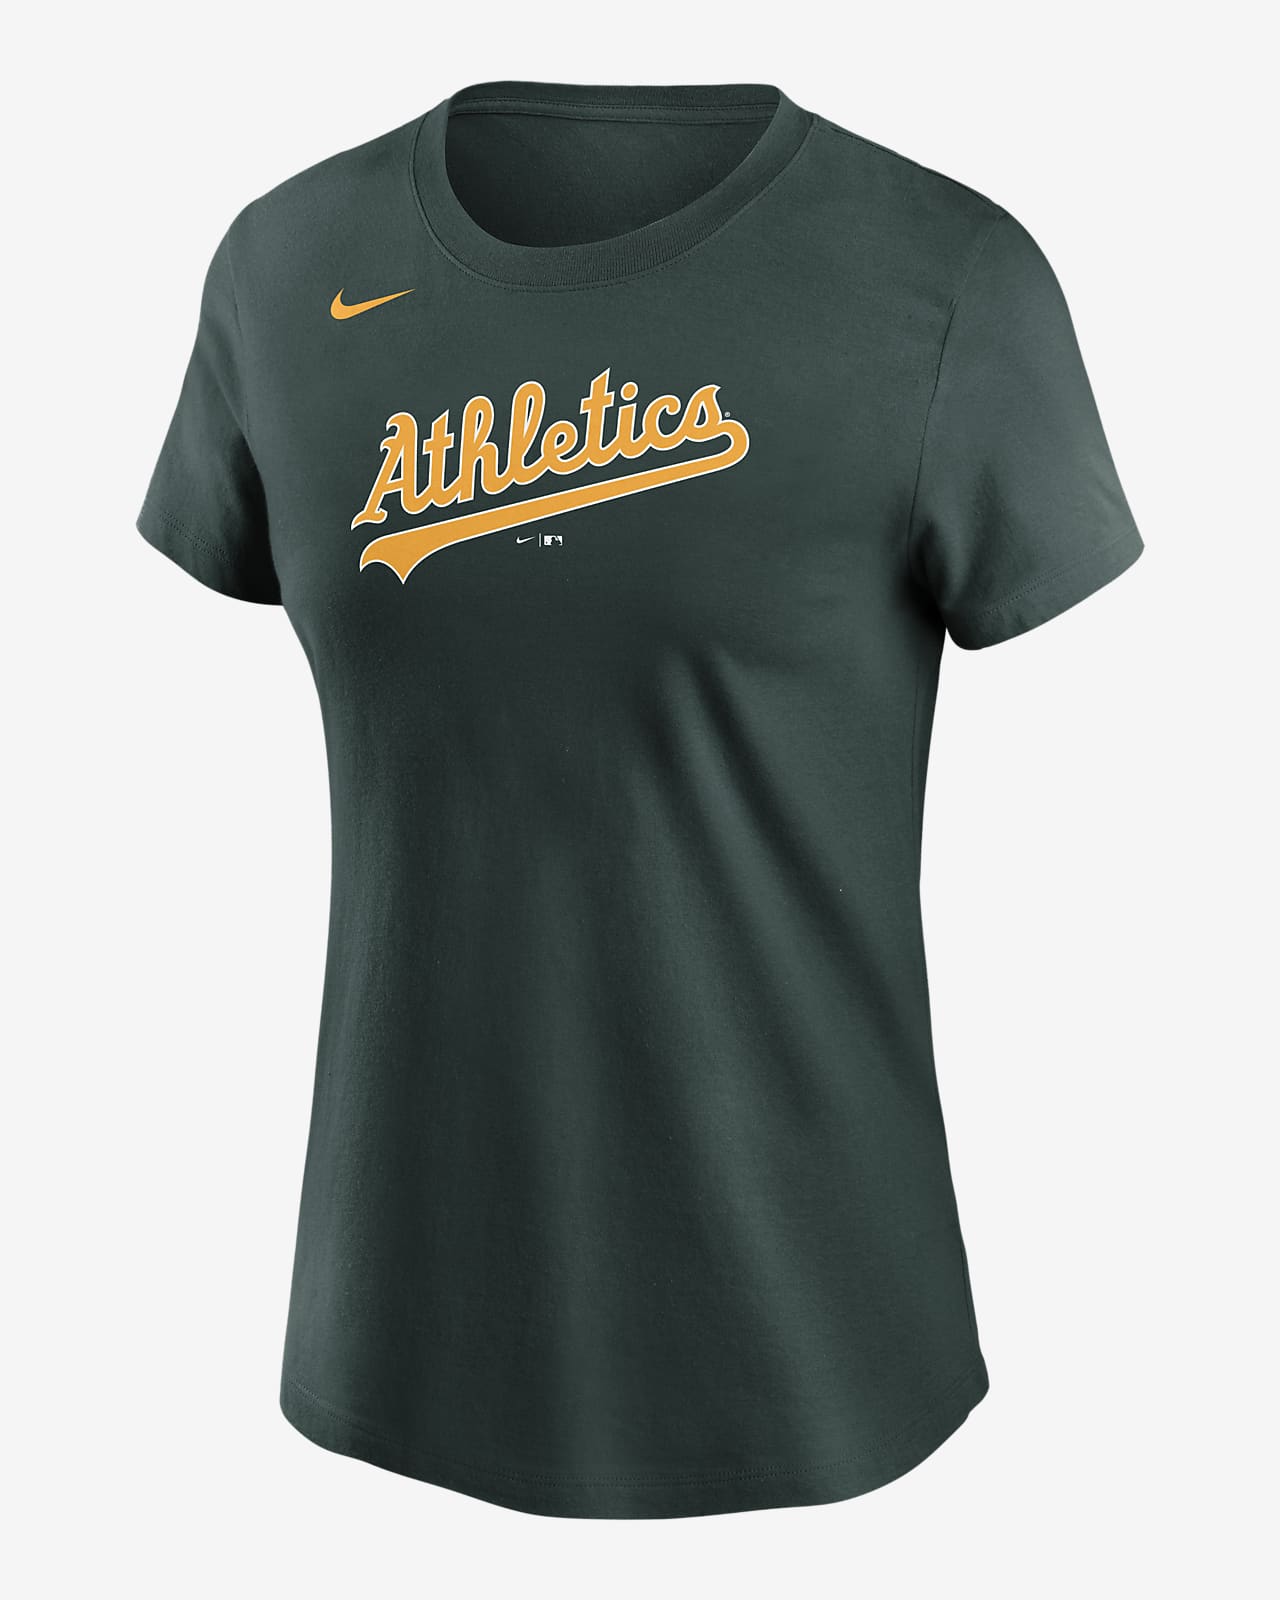 MLB Oakland Athletics (Khris Davis) Women's T-Shirt